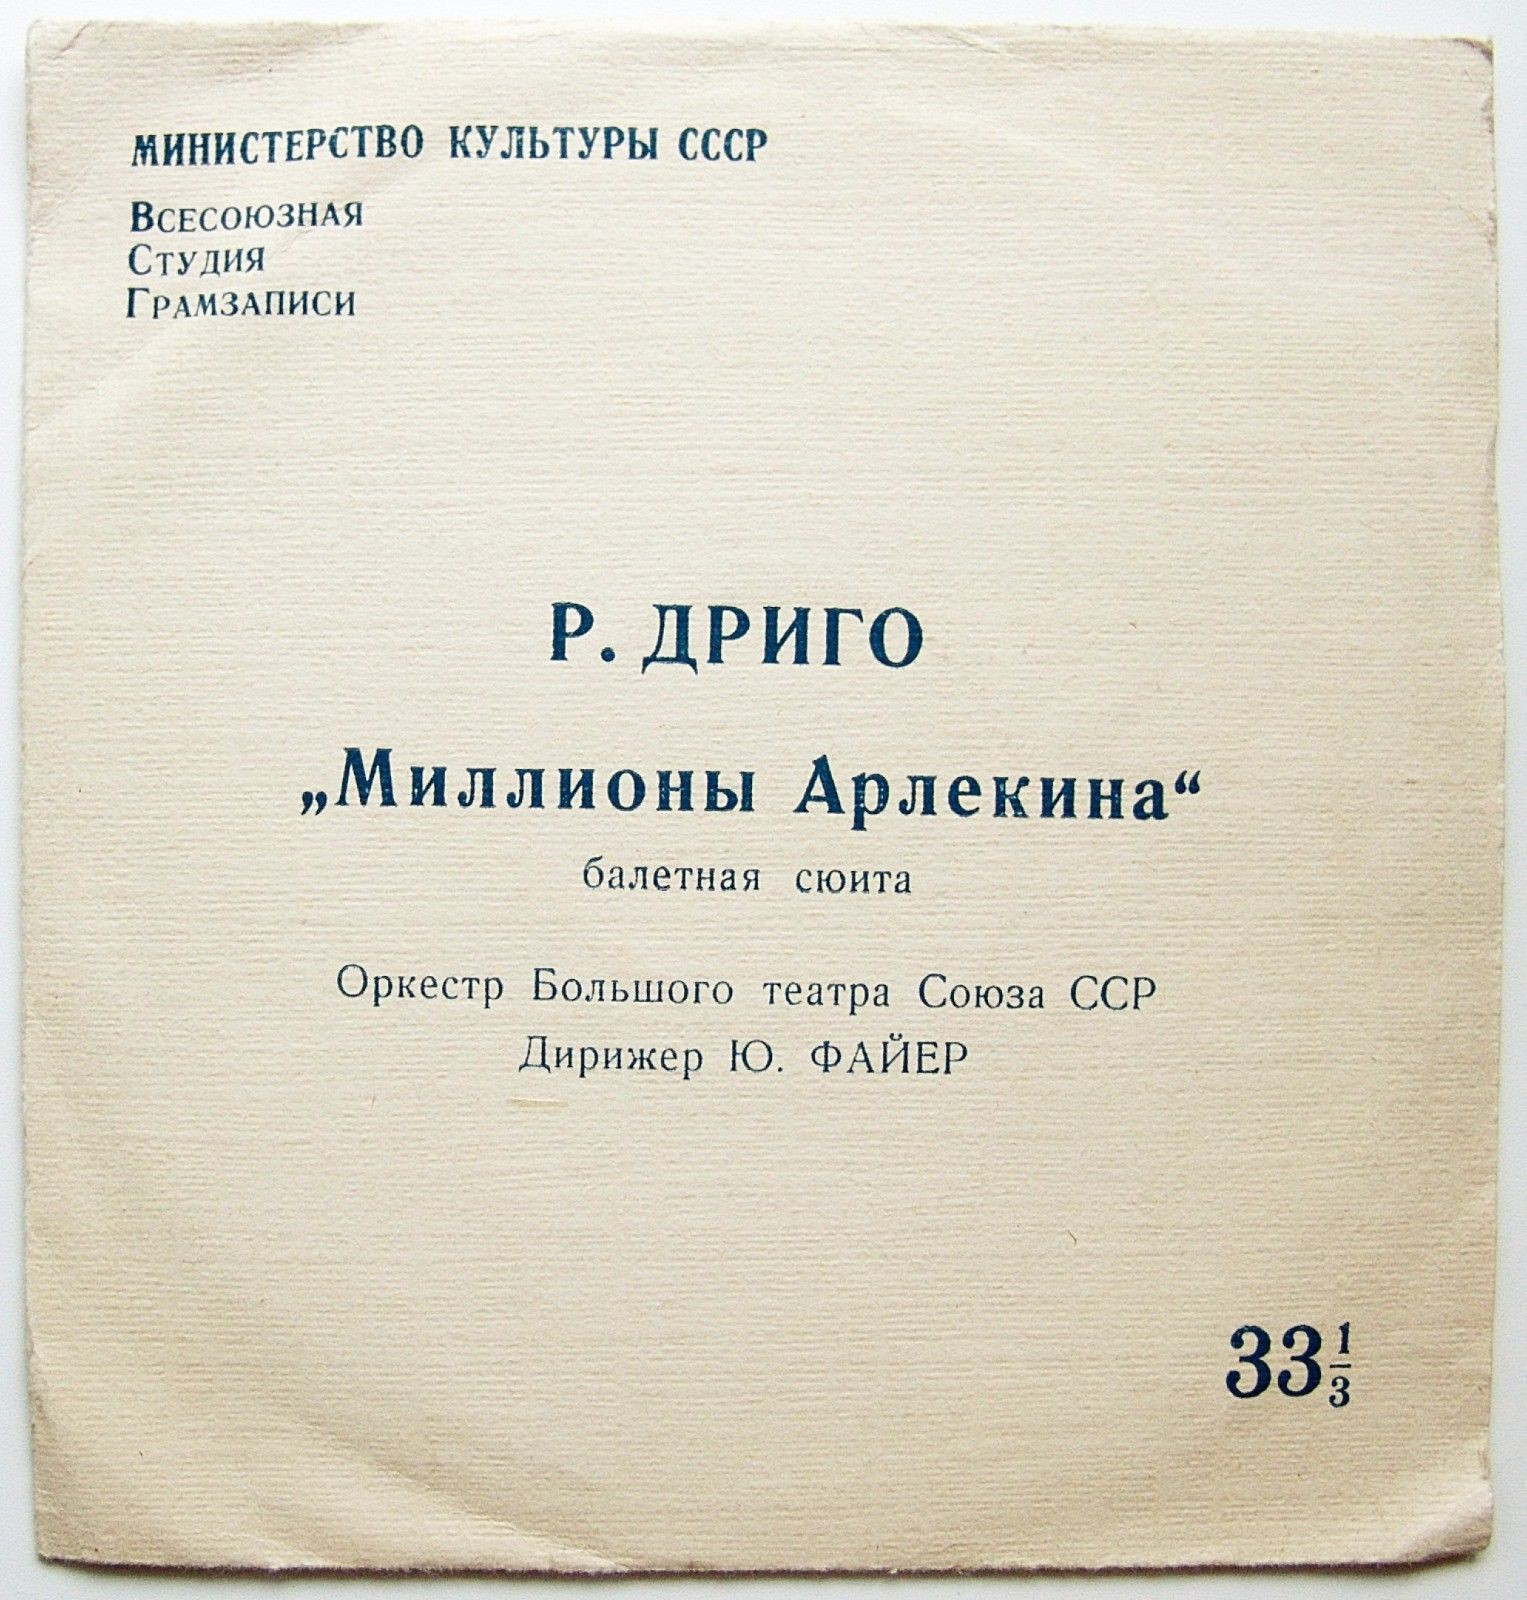 Р. ДРИГО (1846-1930). "Миллионы Арлекина", сюита из балета